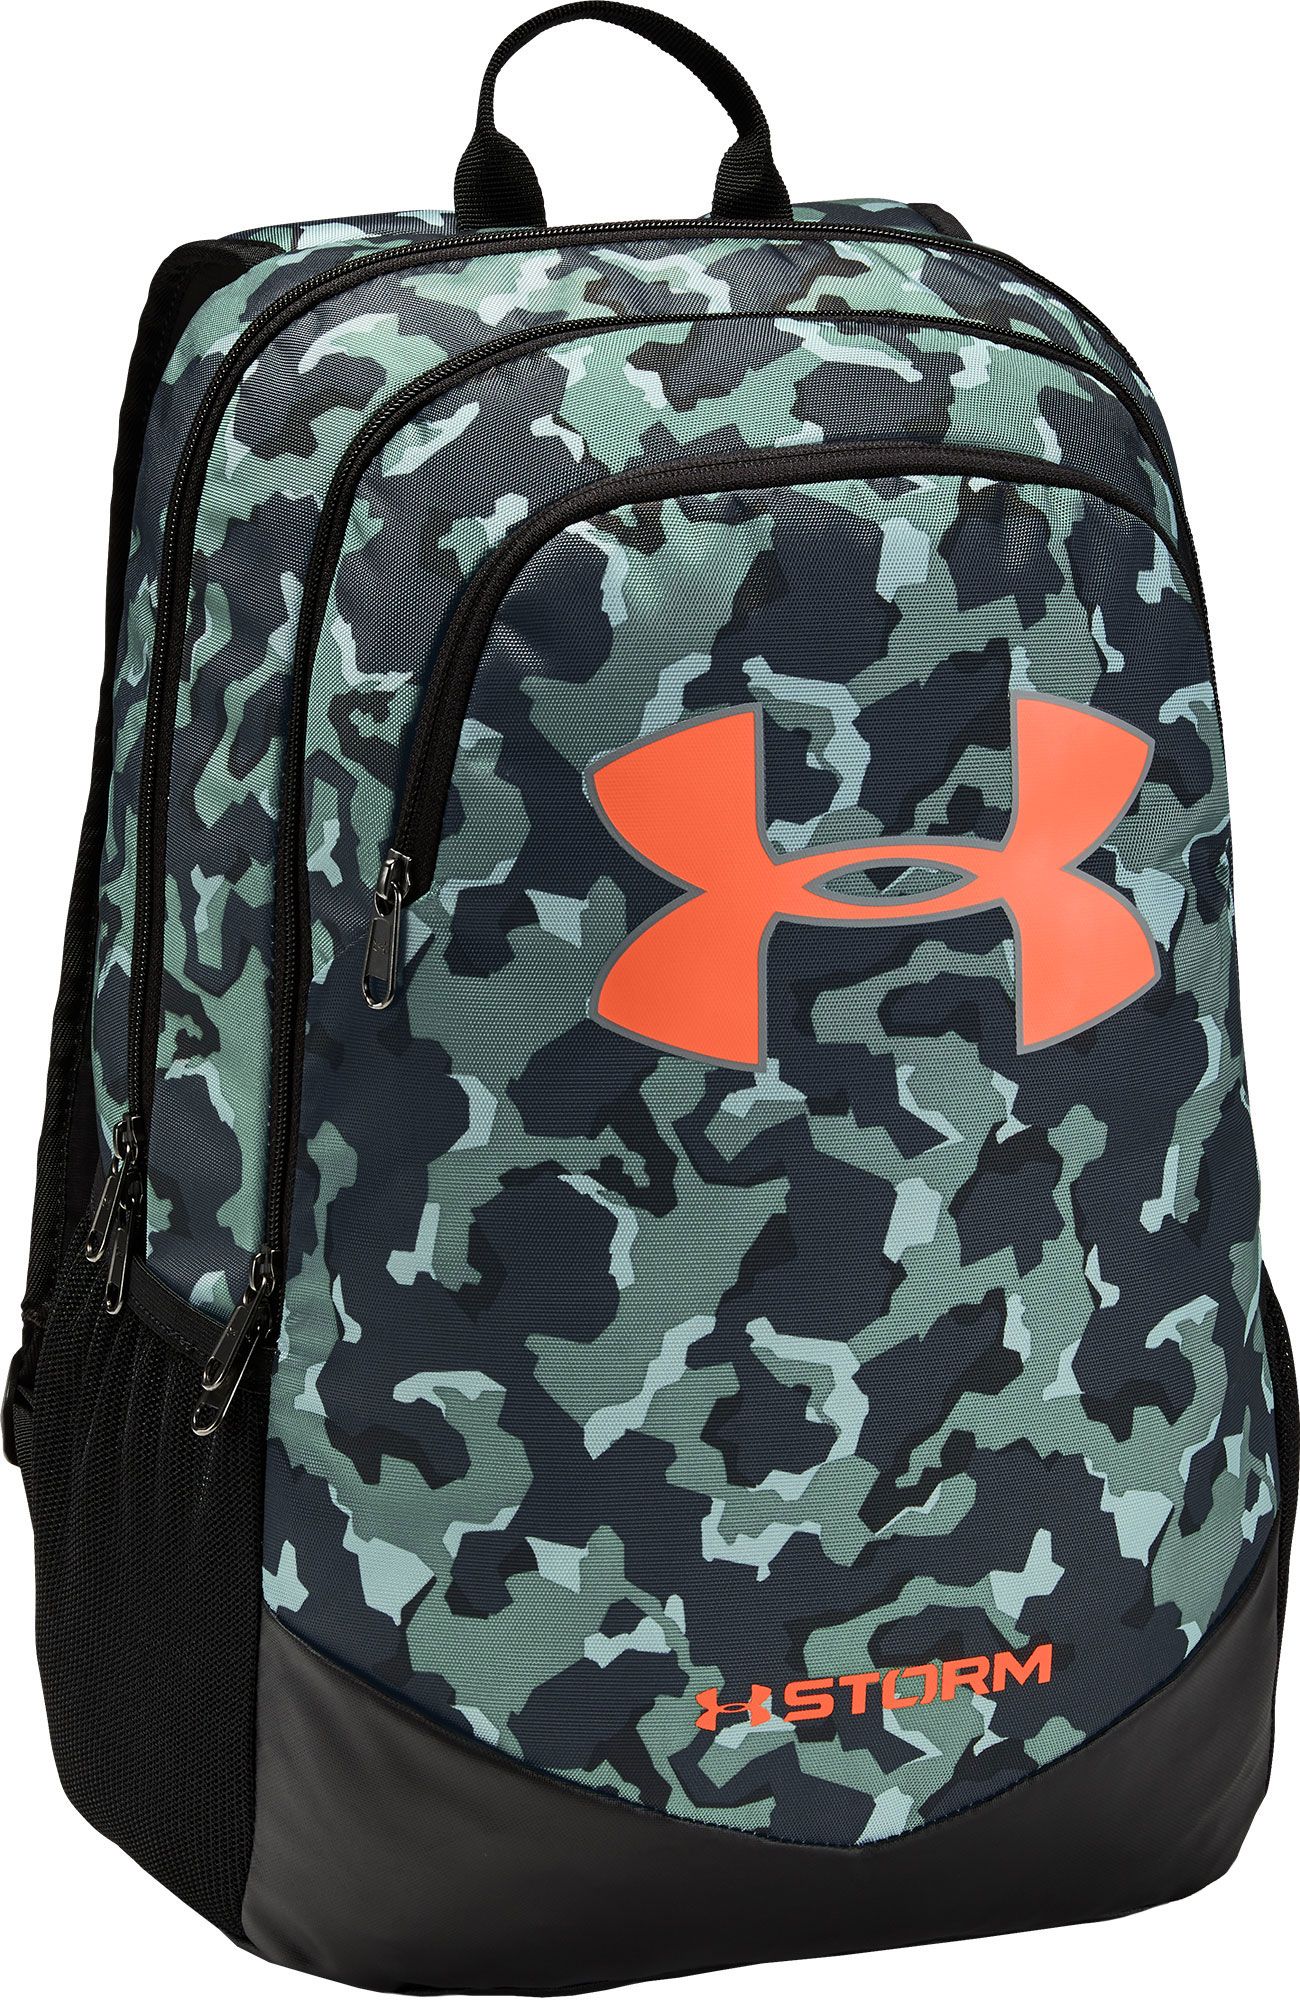 scrimmage backpack